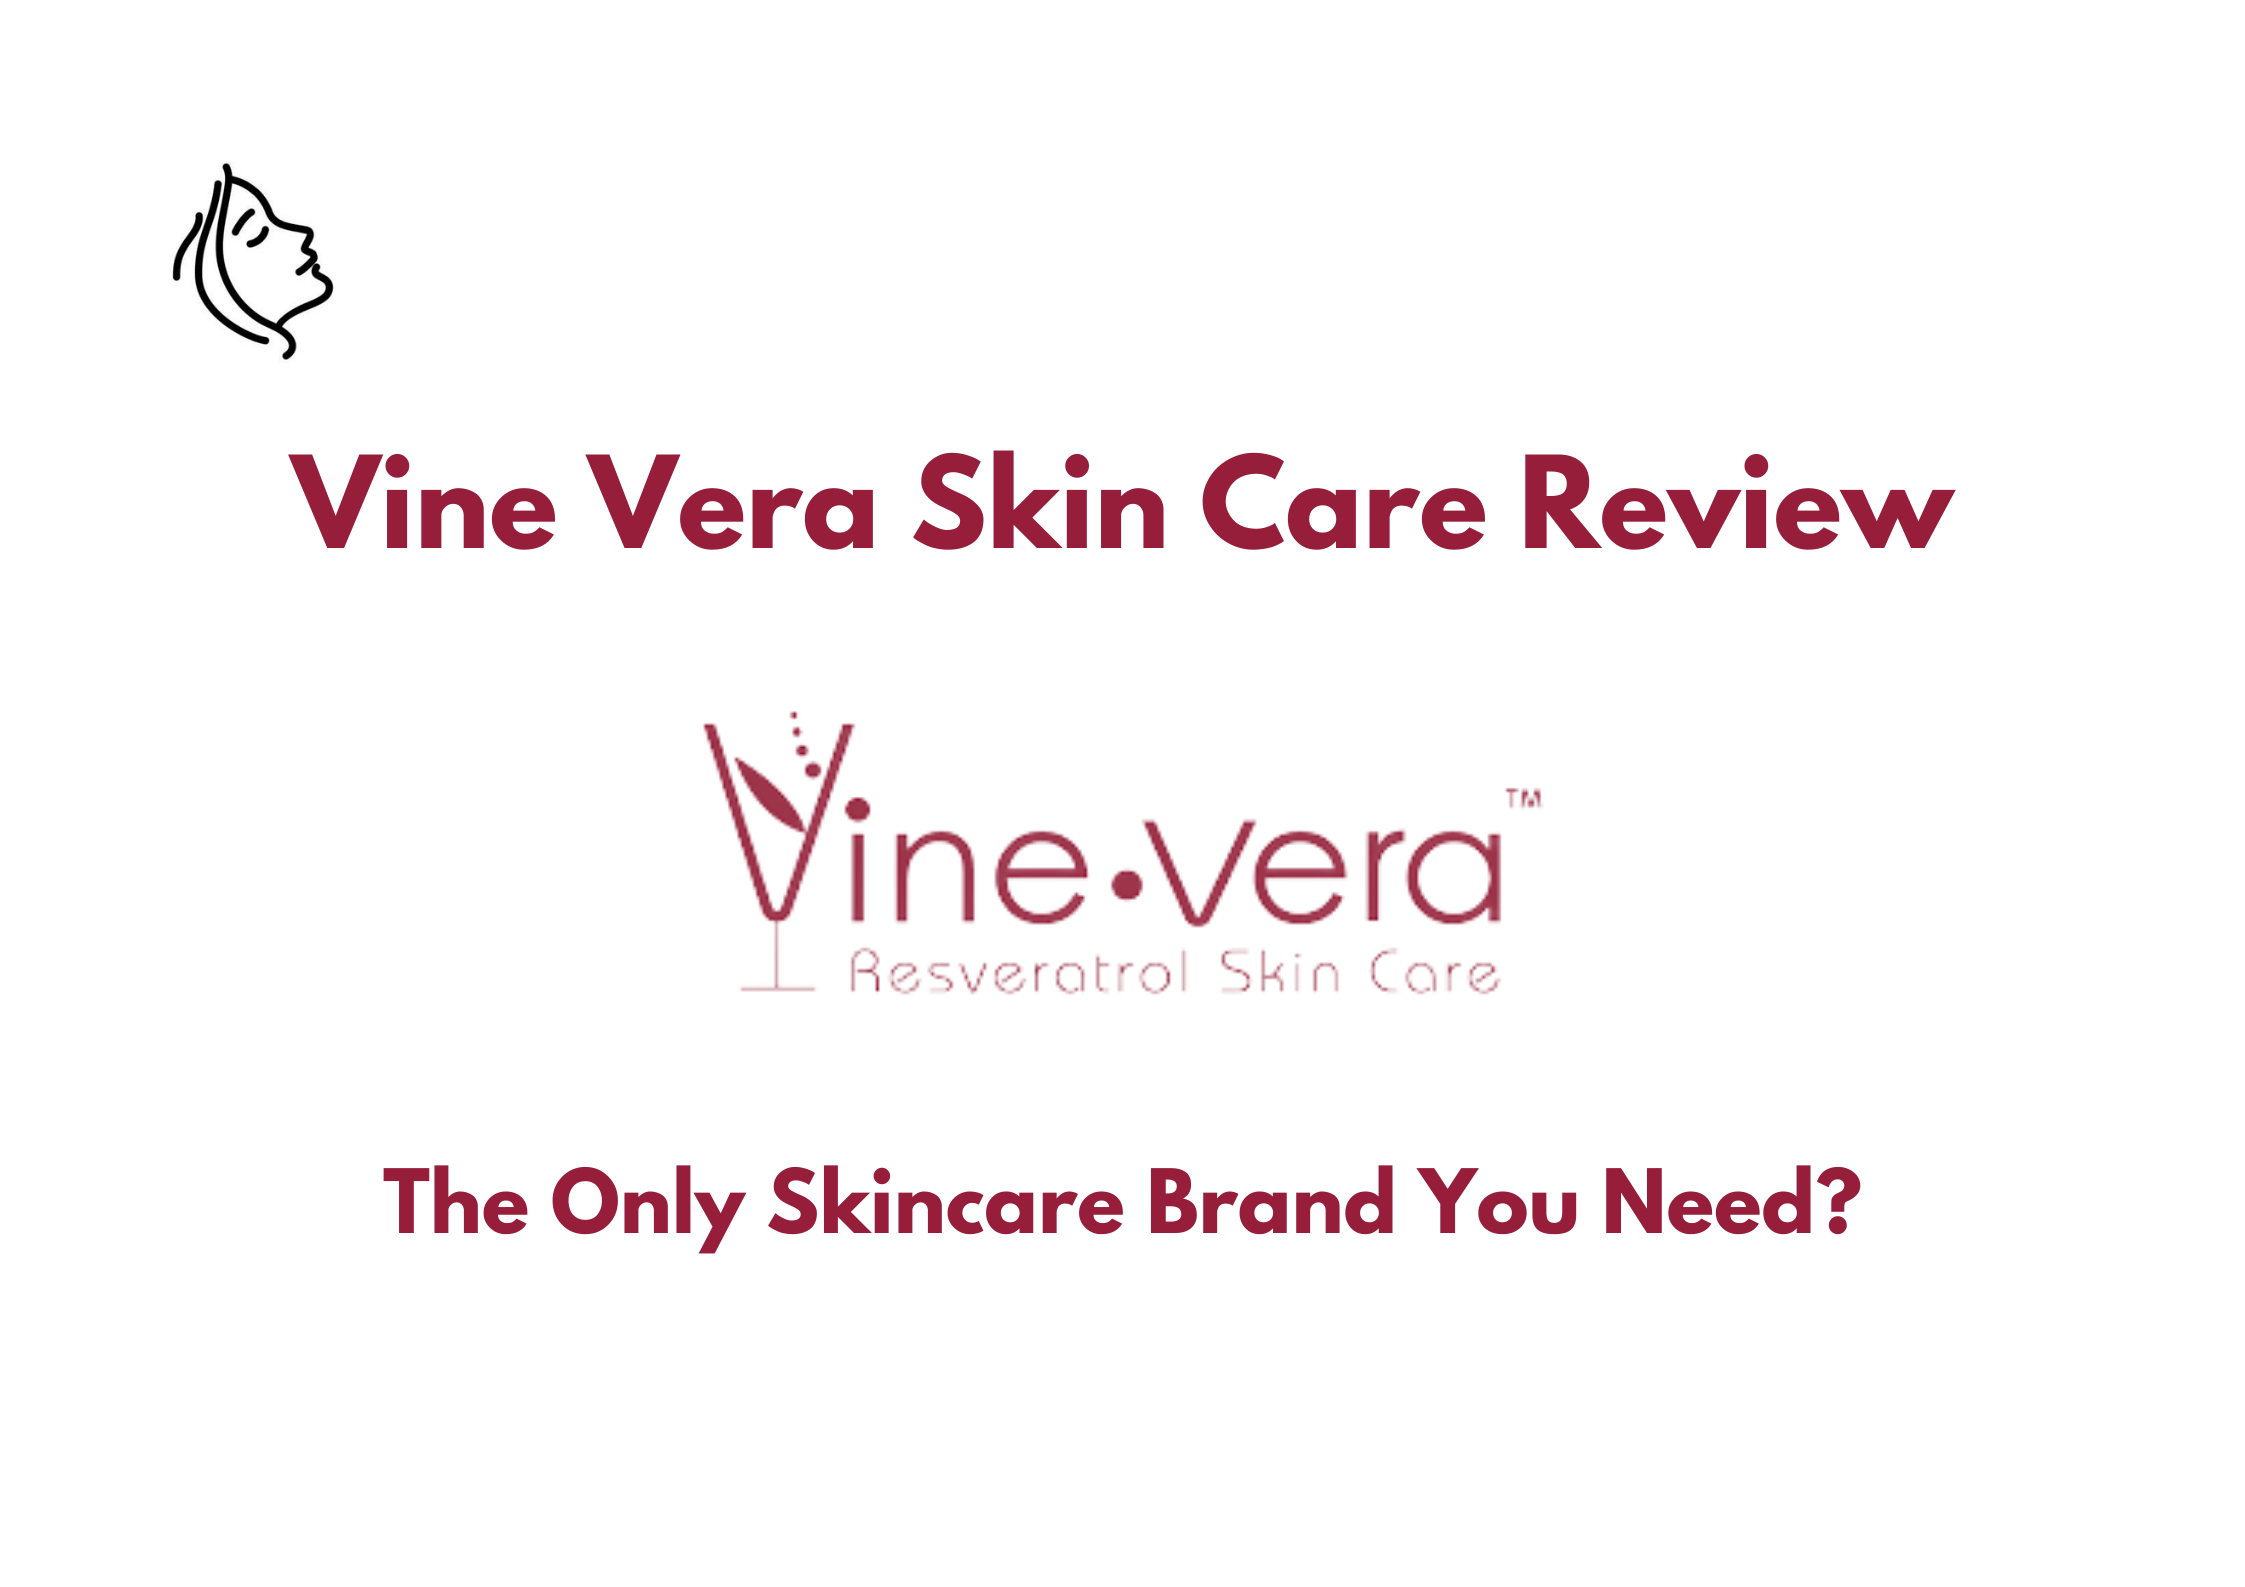 Vine Vera Skin Care Review